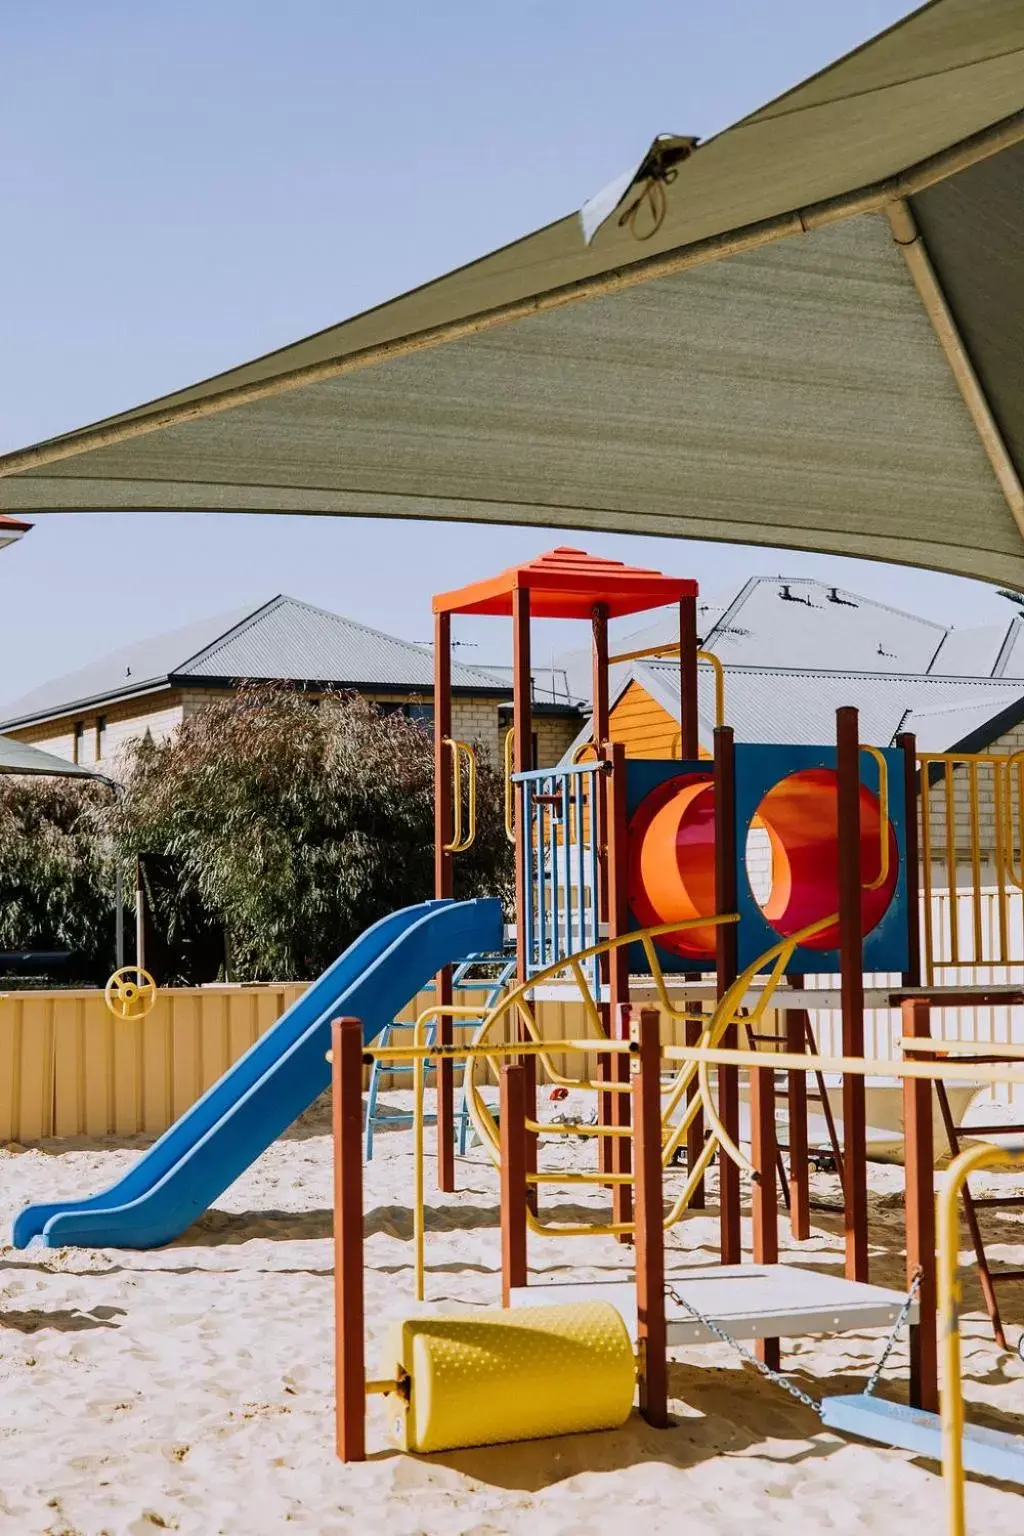 Children play ground, Children's Play Area in The Jetty Resort